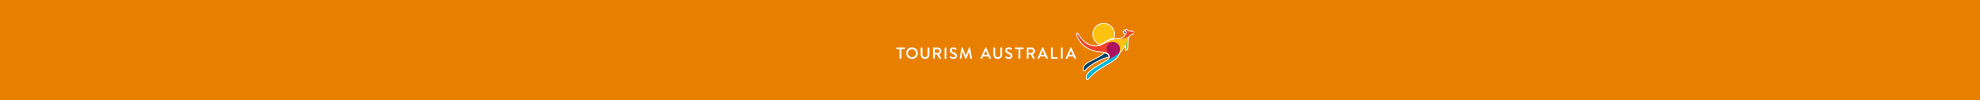 marketplace india tourism australia